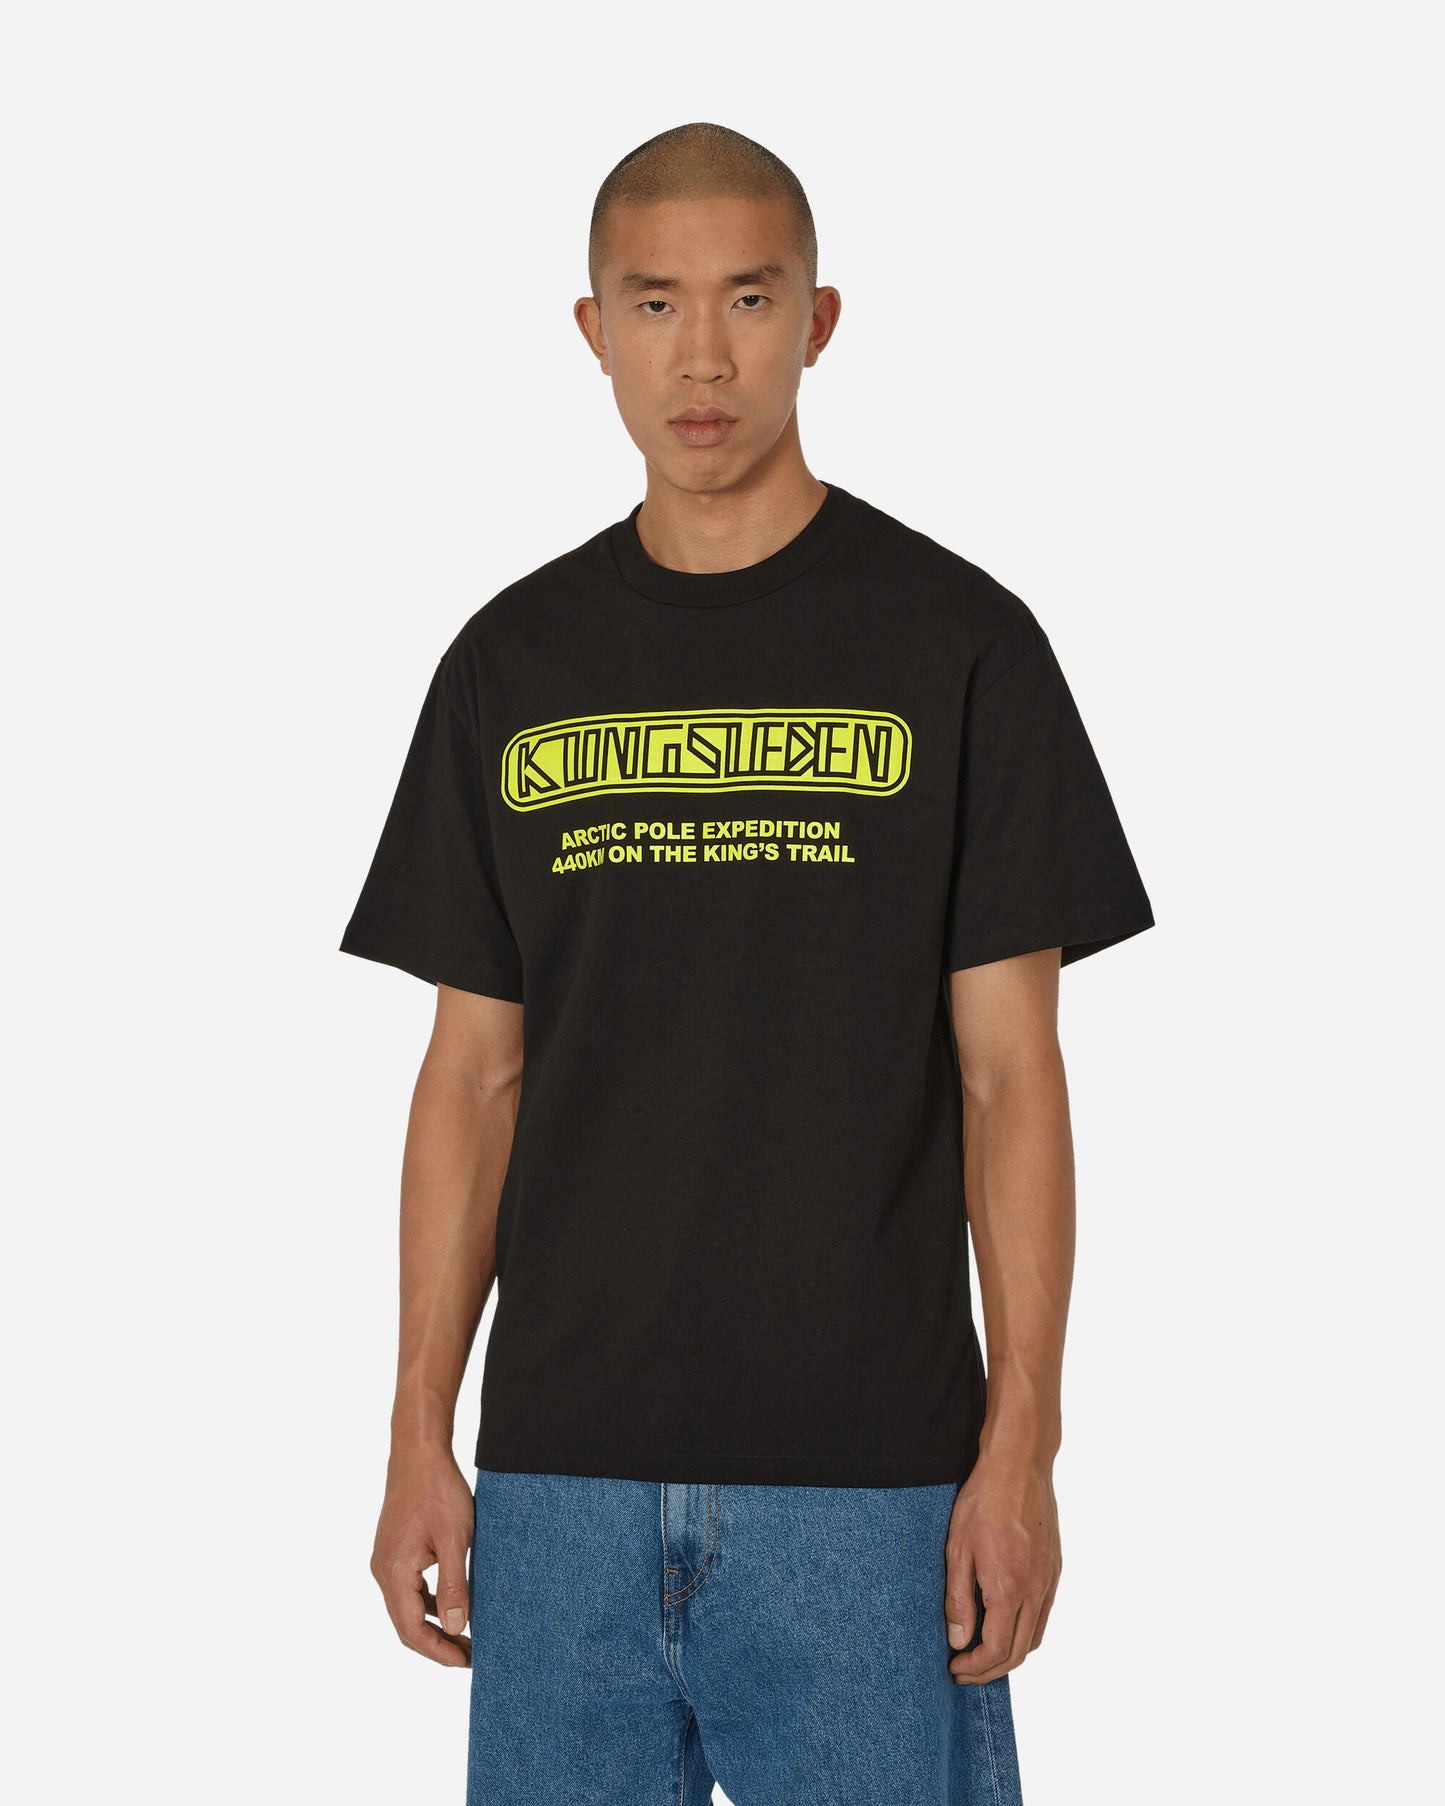 Rayon Vert Lapland T-Shirt Golgotha Black T-Shirts Shortsleeve RVS2-TS02 001